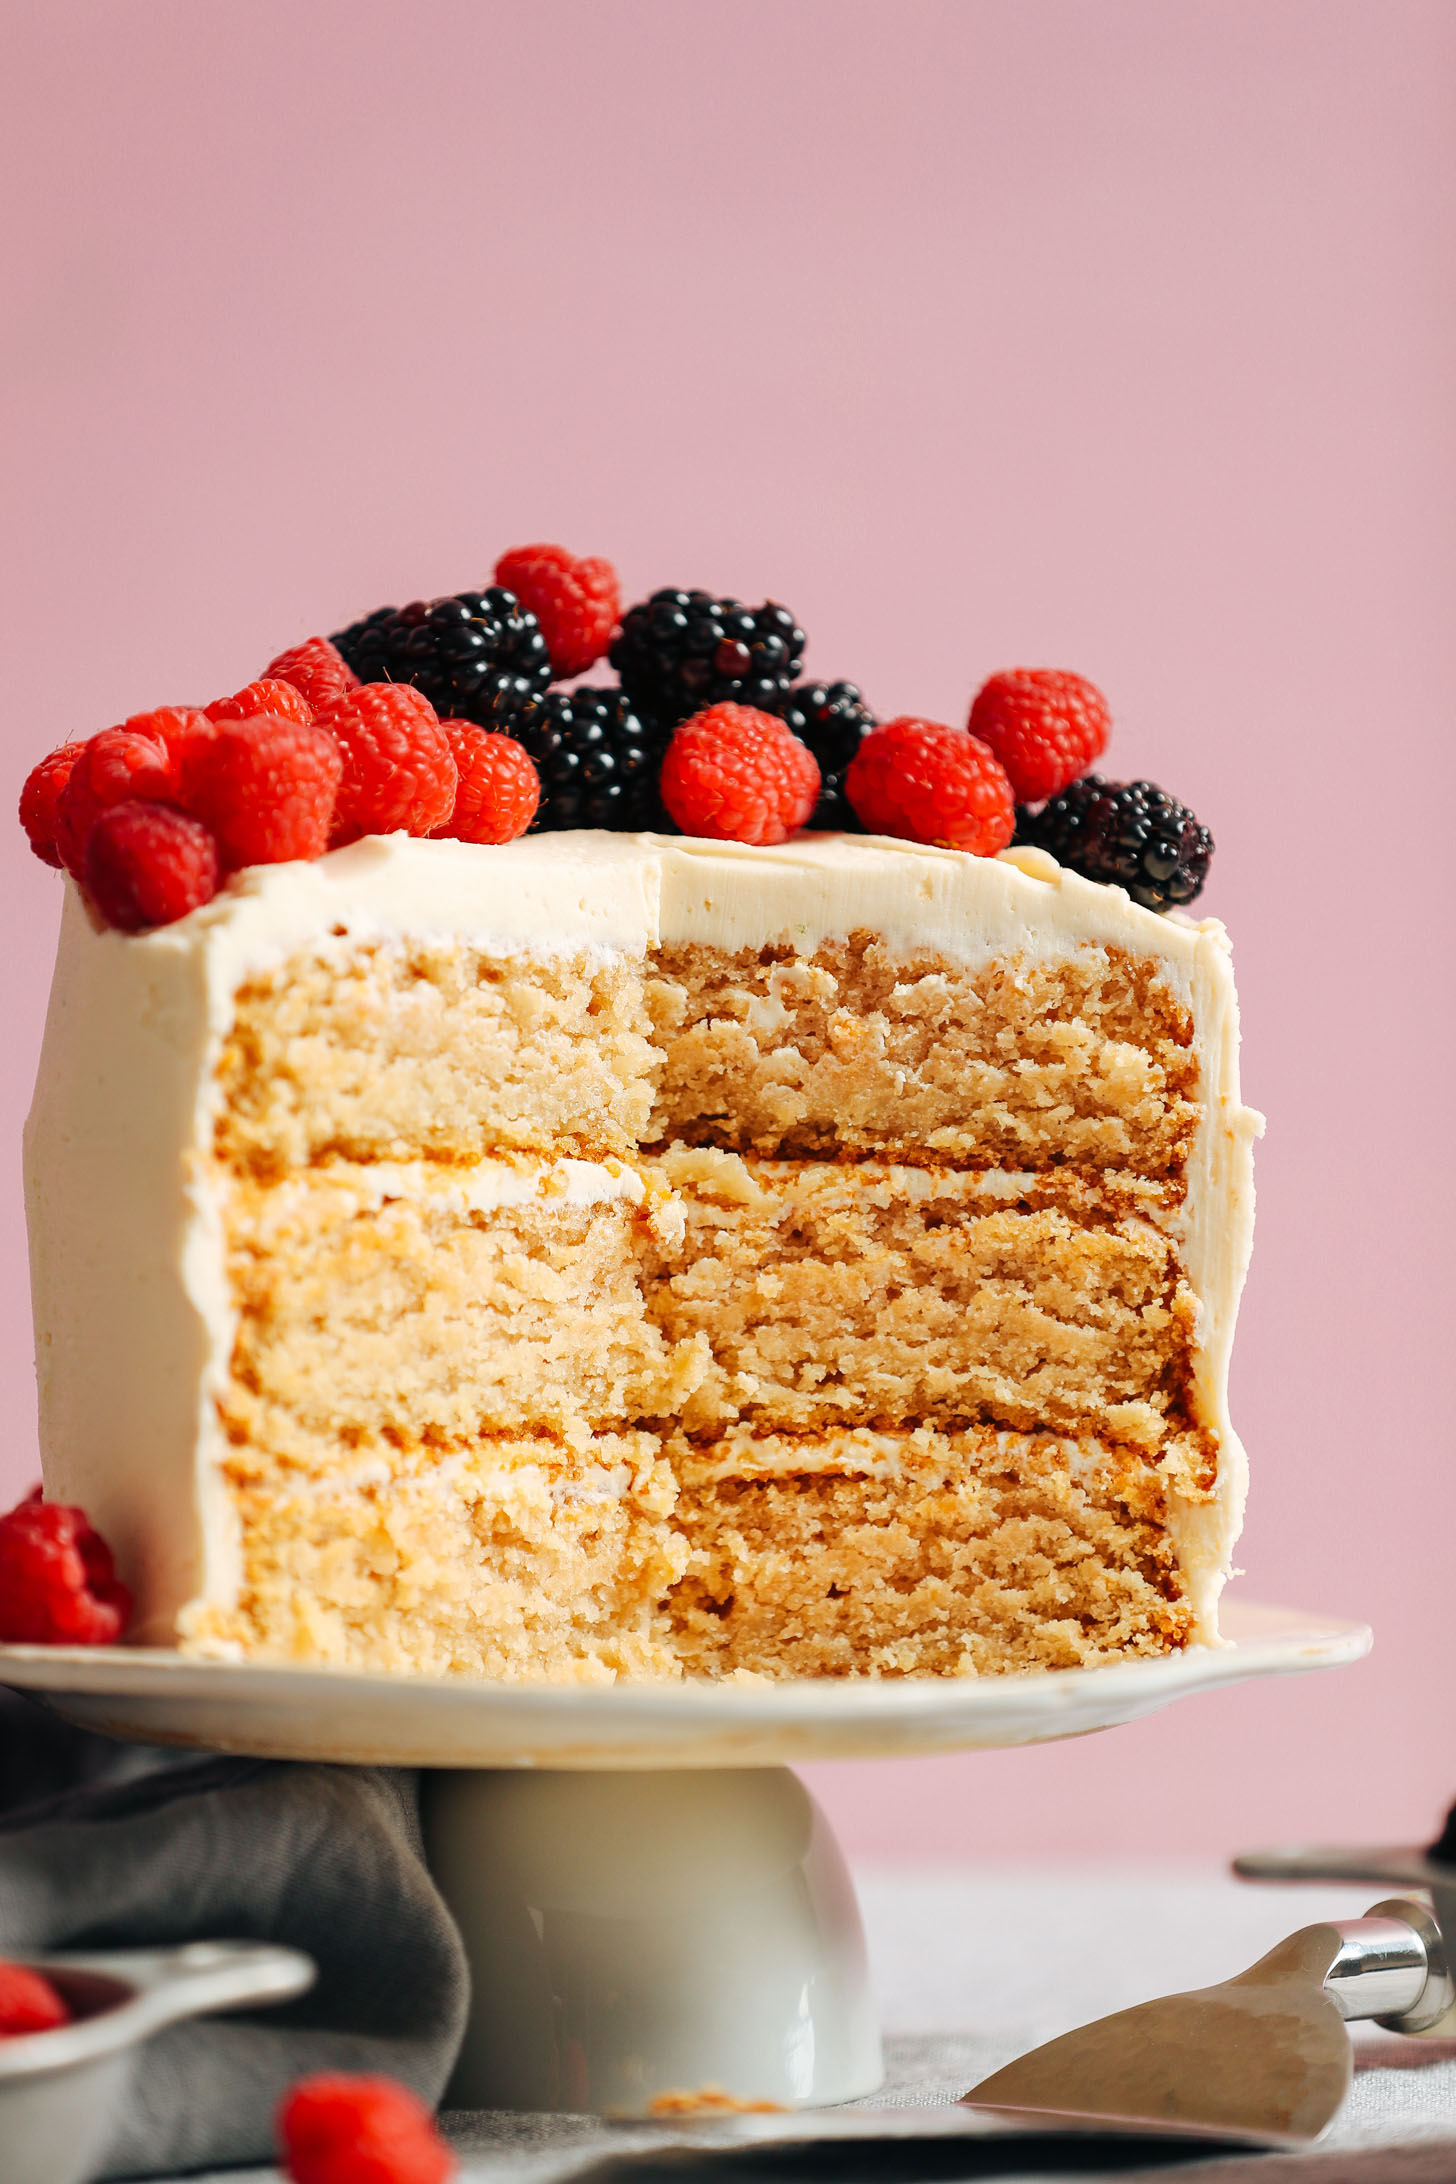 1-Bowl Vegan Gluten-Free Vanilla Cake | Minimalist Baker Recipes